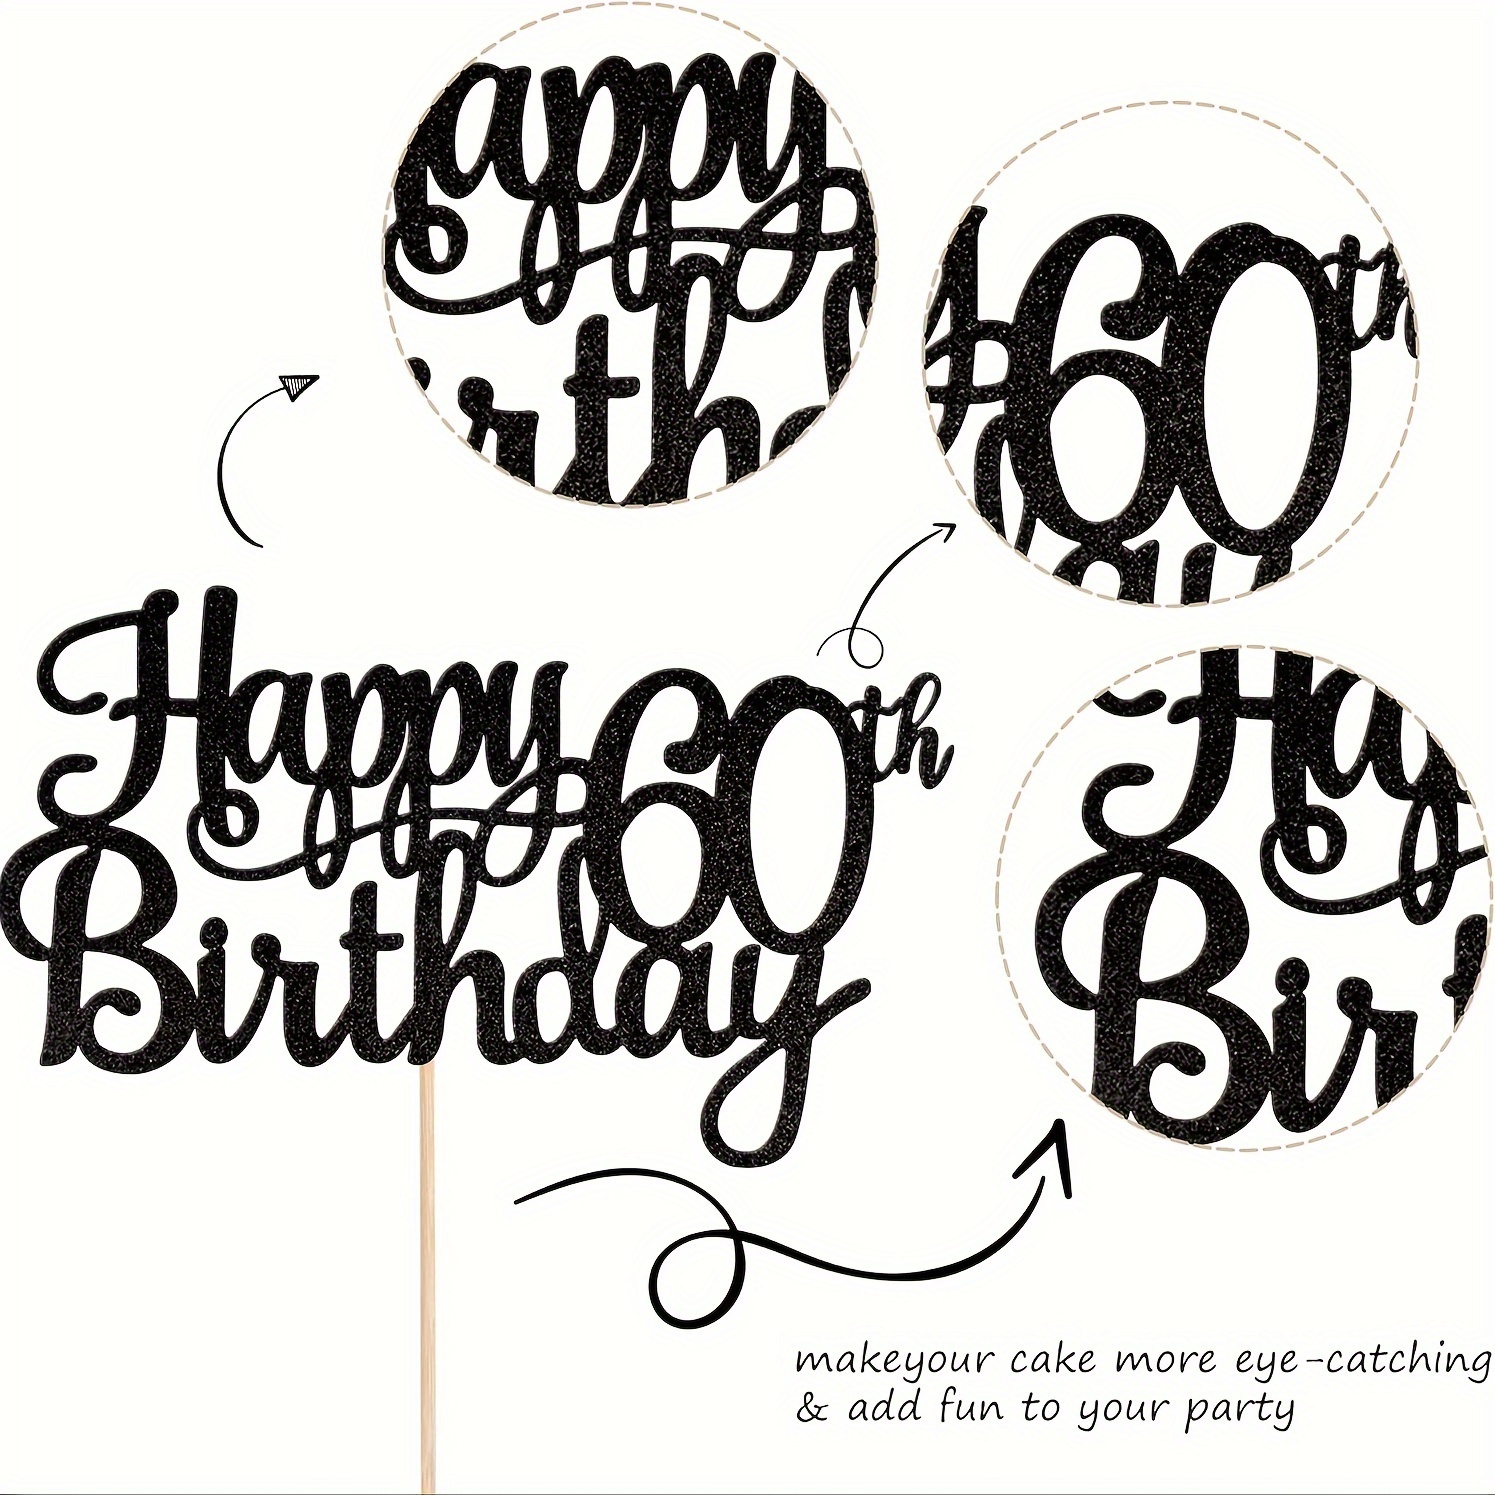 Happy Anniversary Cake Topper - Wedding Anniversary Company Anniversary  Party Decoration Supplies, Black Glitter